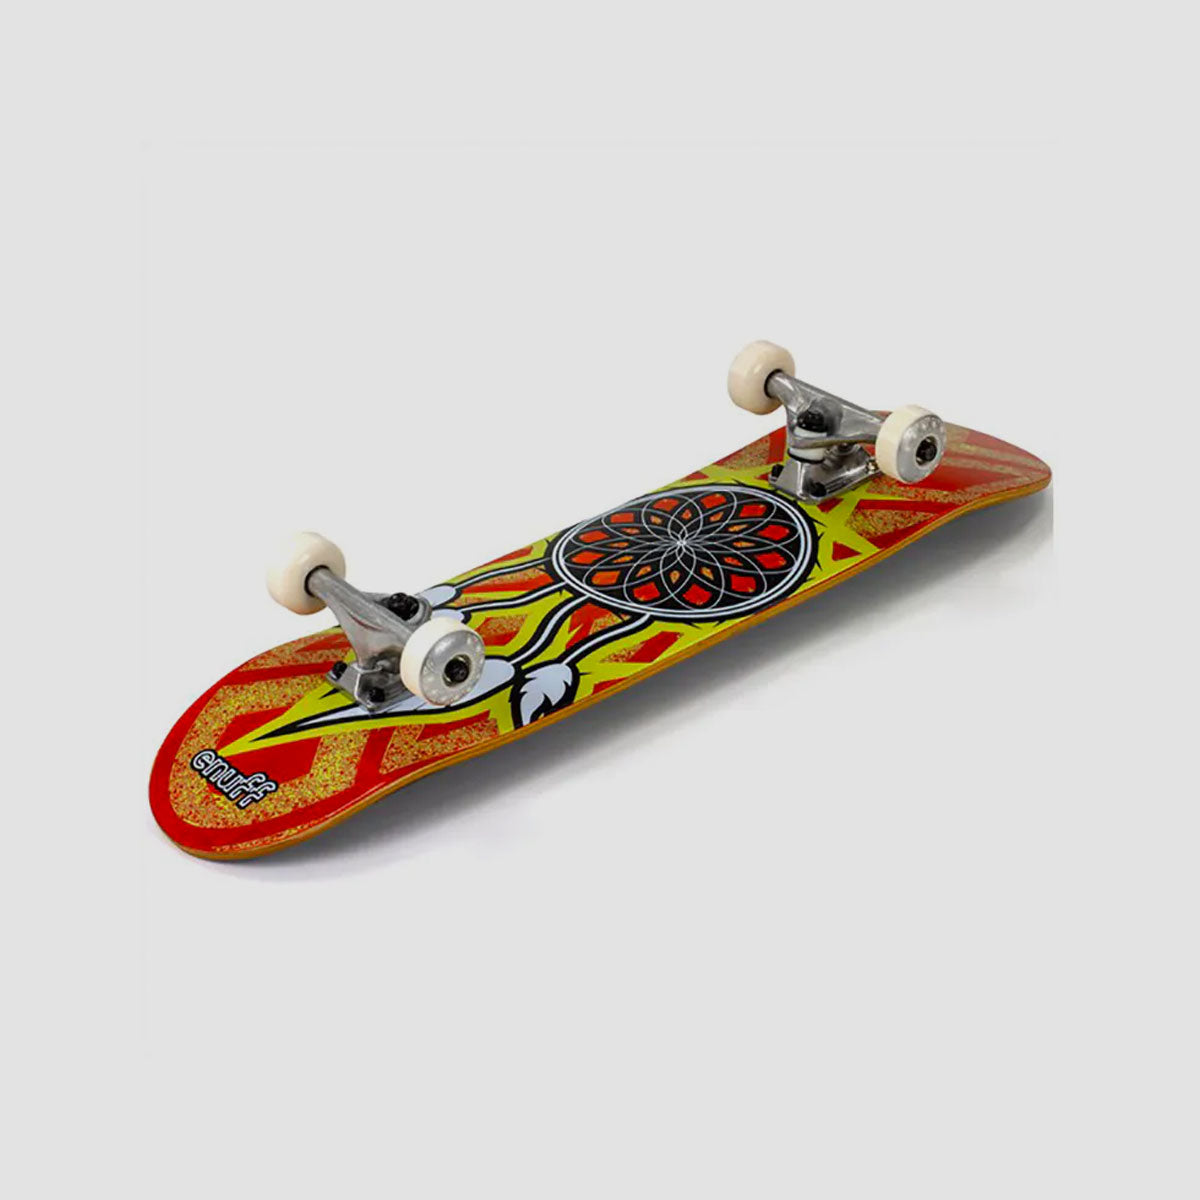 Enuff Dreamcatcher Mini Skateboard Orange/Yellow - 7.25"